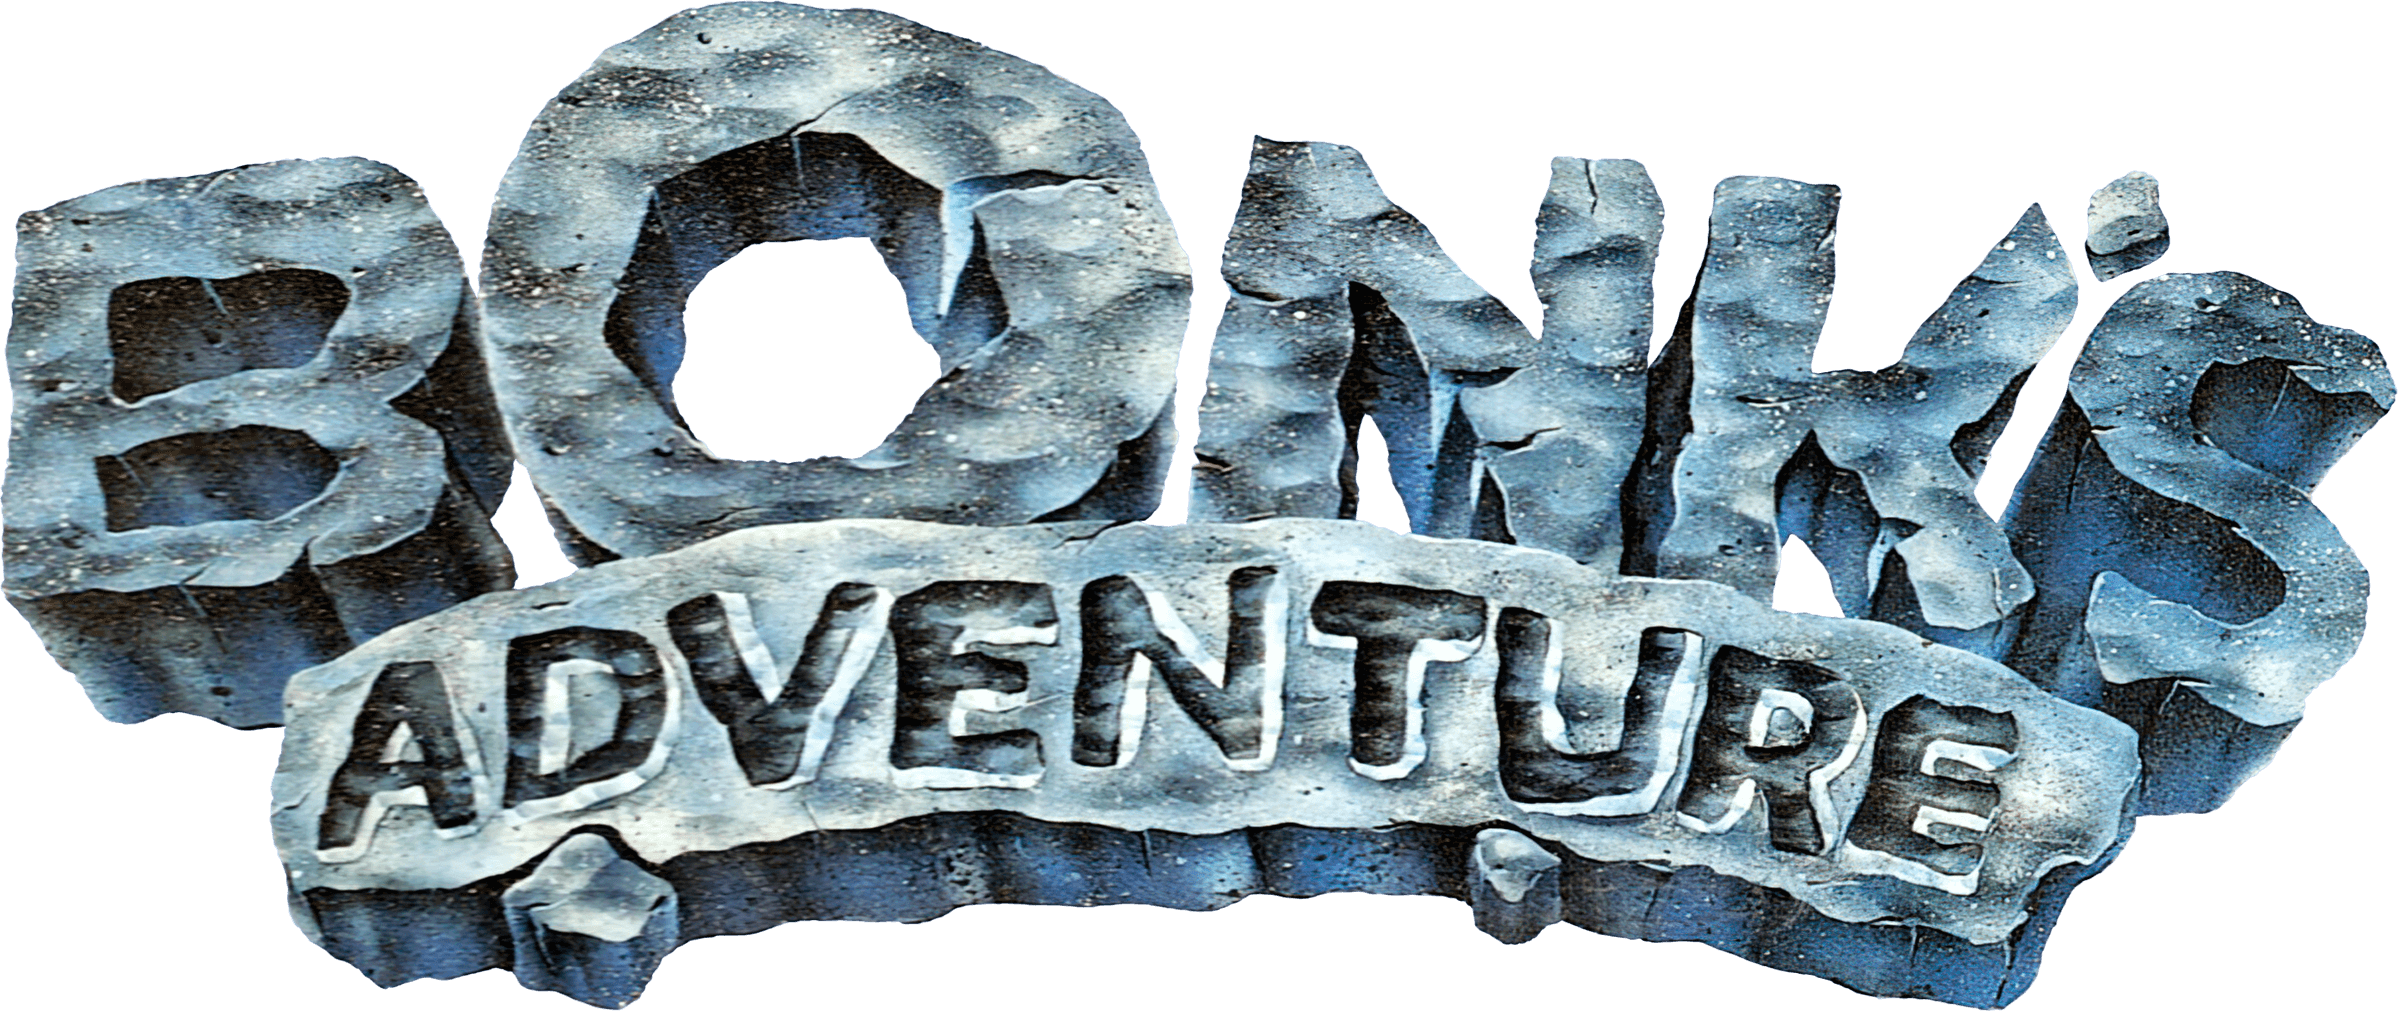 Free customizable mountain logos templates | Canva